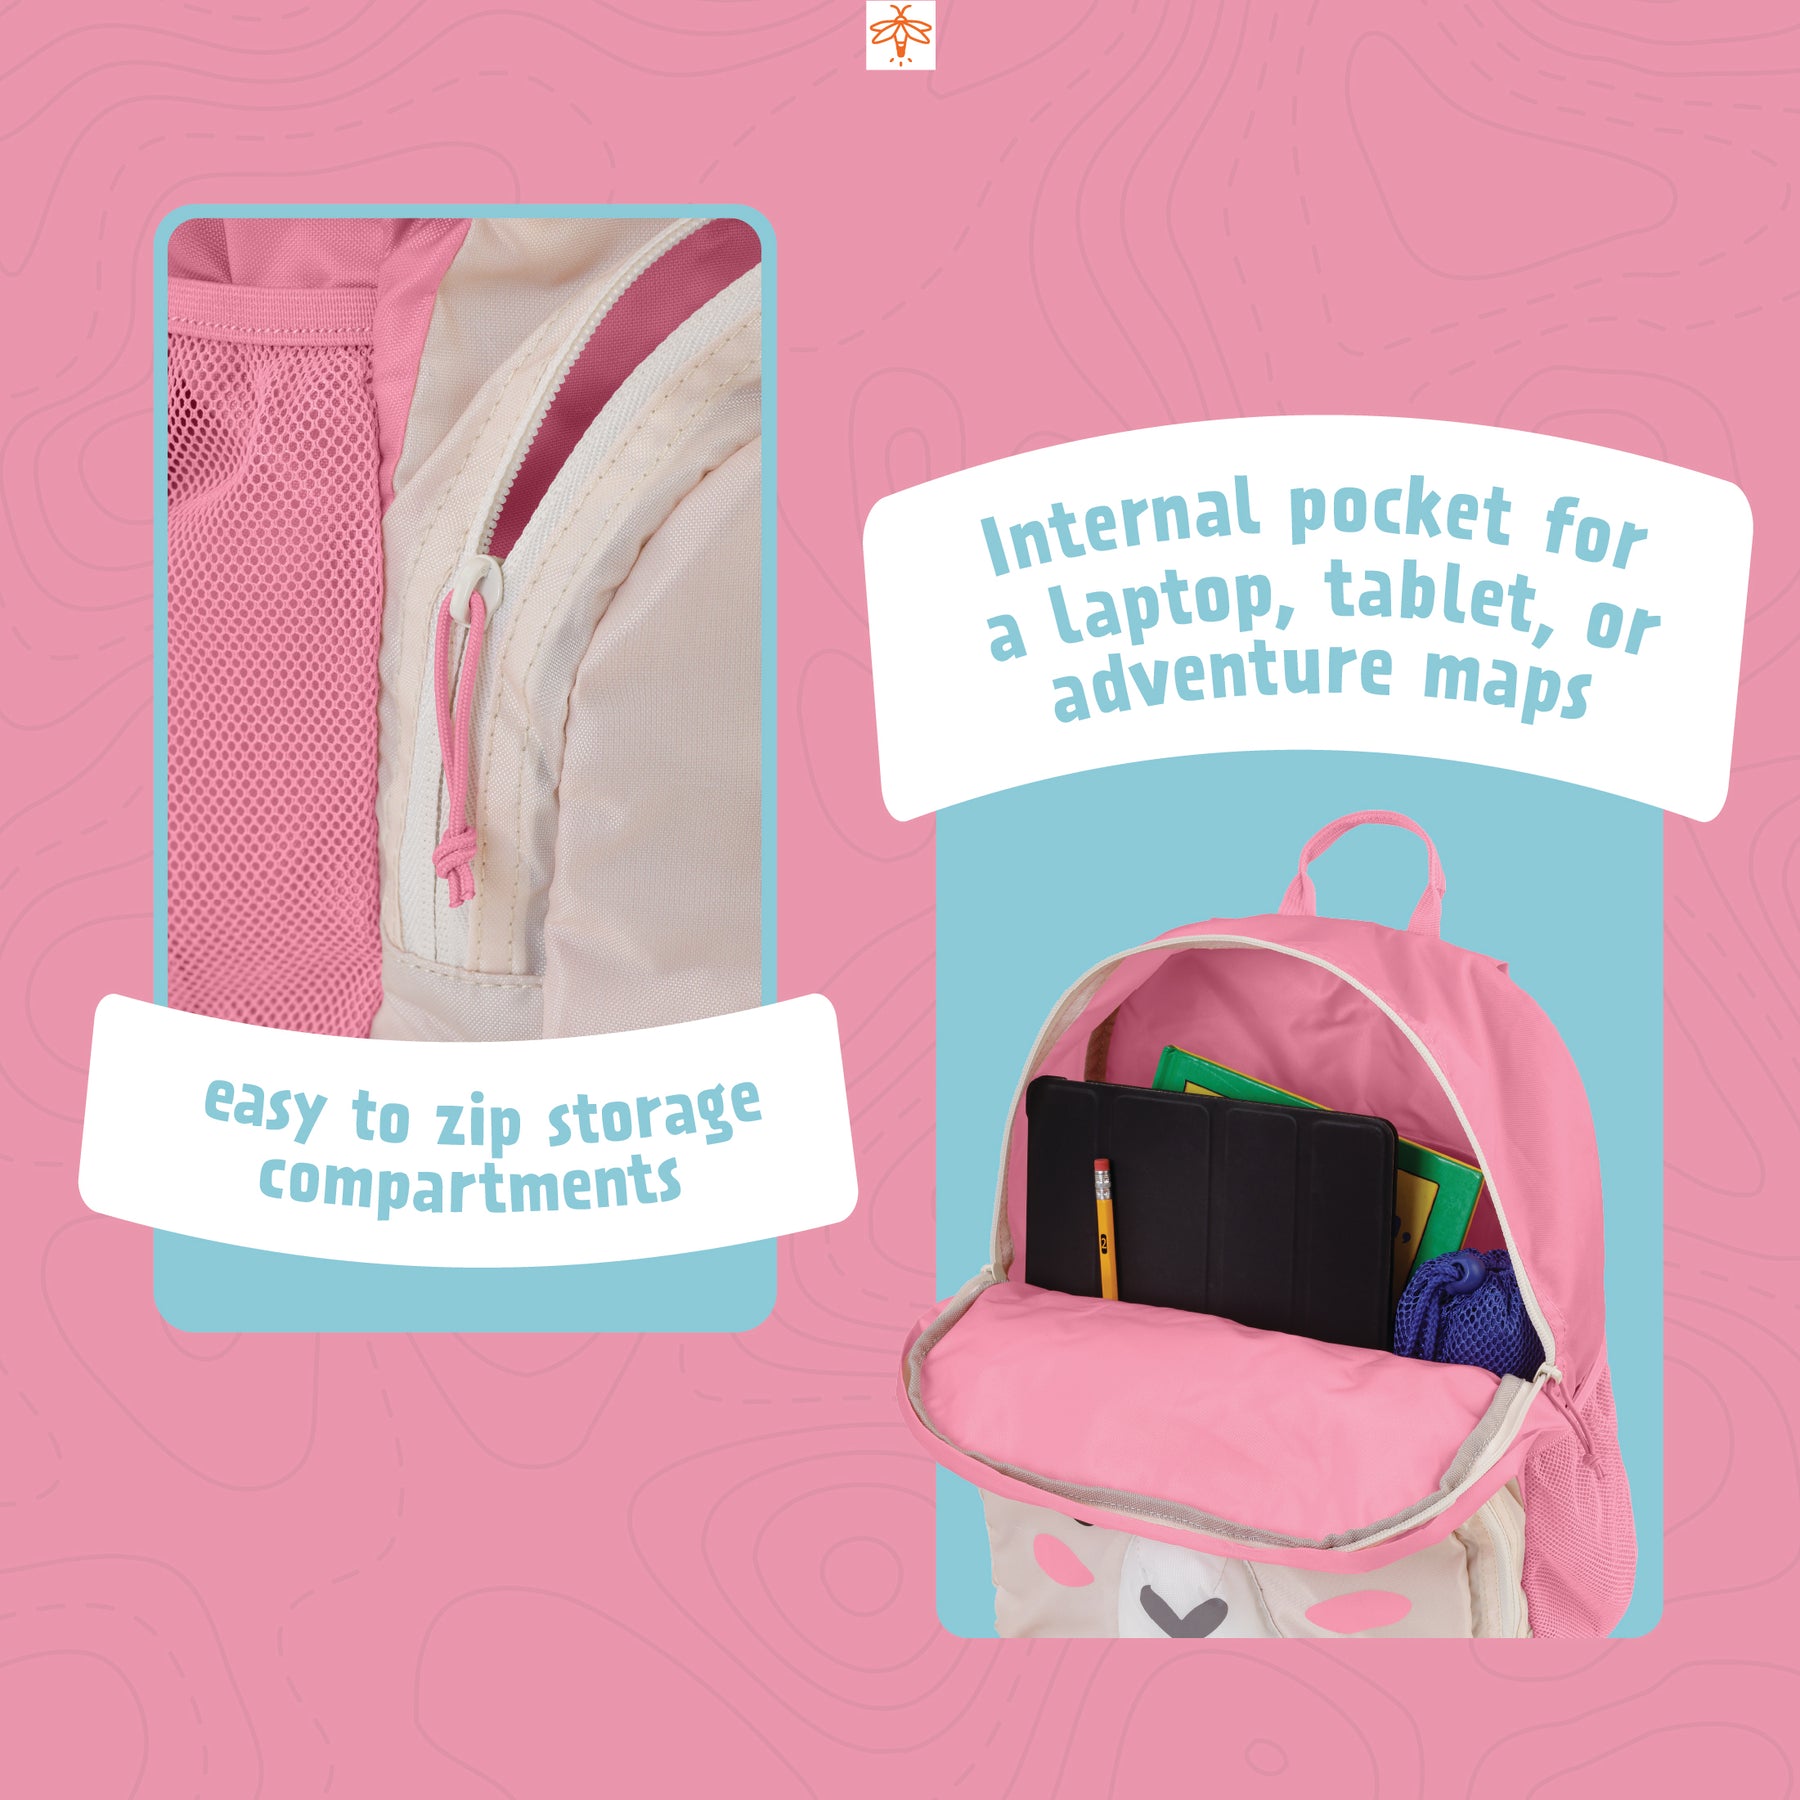 Adventure Pink Backpack